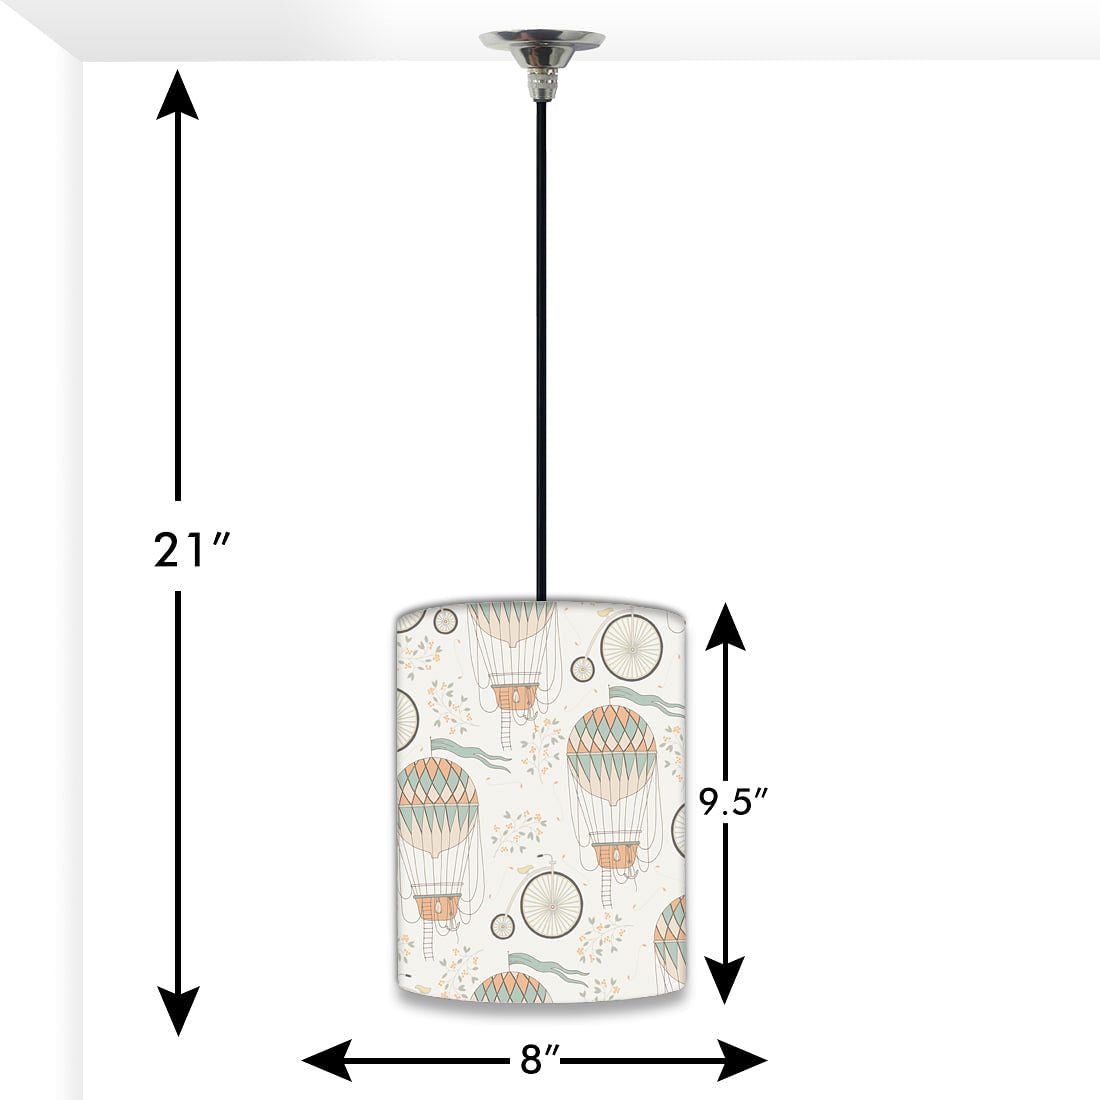 Hanging Ceiling Lights Lamps for Living Room - 0128 Nutcase